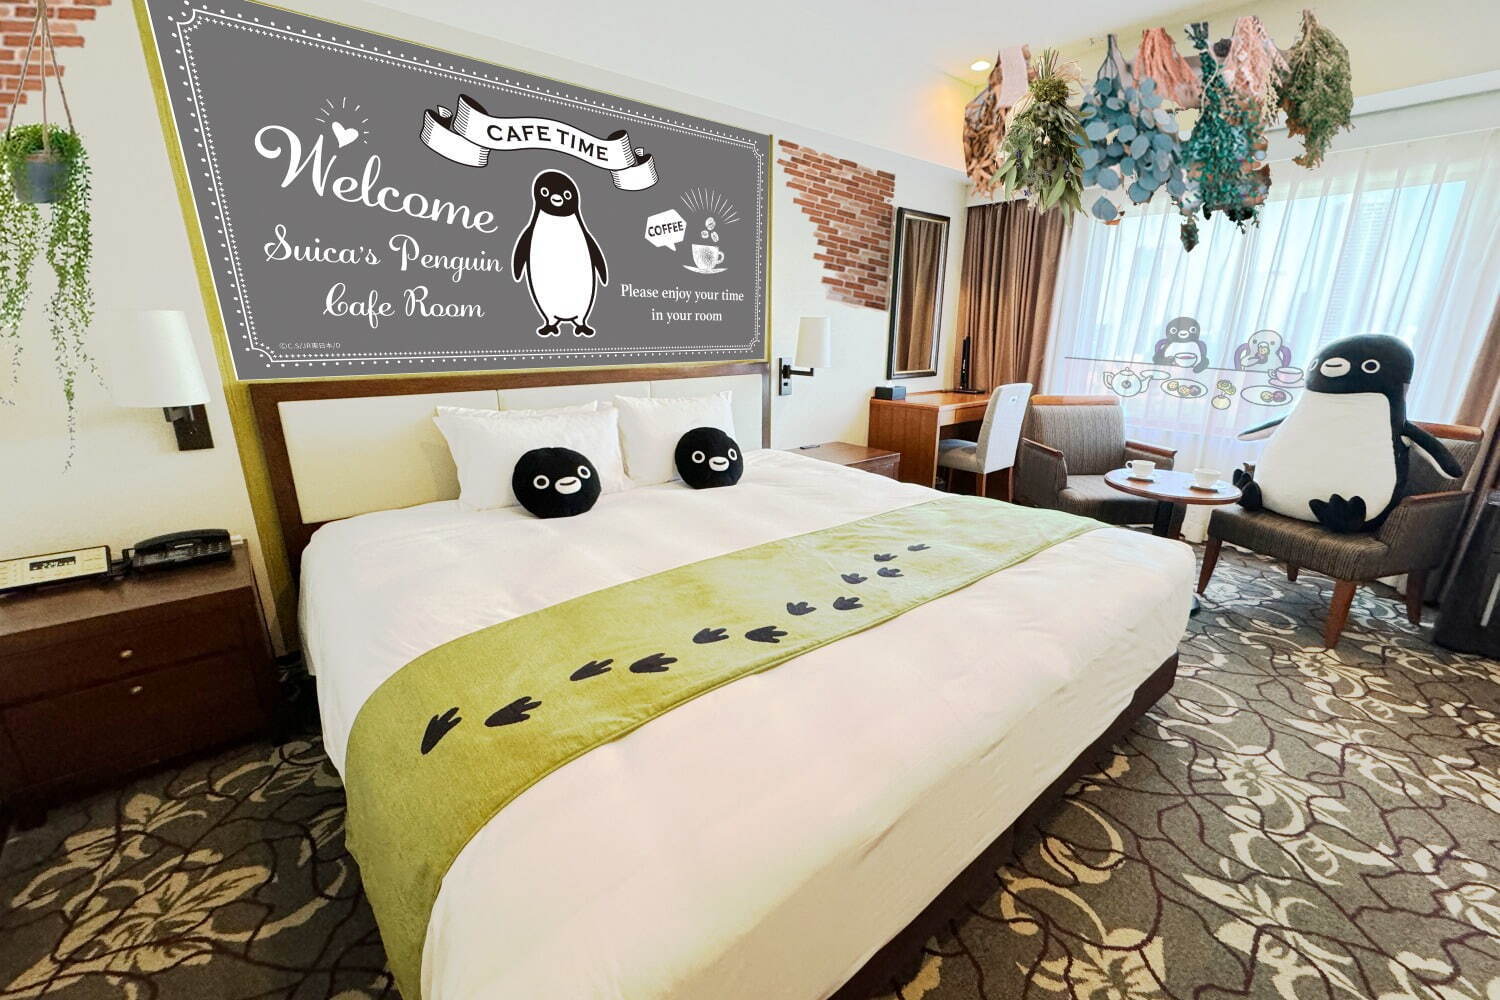 「Suicaのペンギン ルーム」宿泊プラン再び、池袋ホテルメトロポリタンで - 限定グッズや朝食付き｜写真1